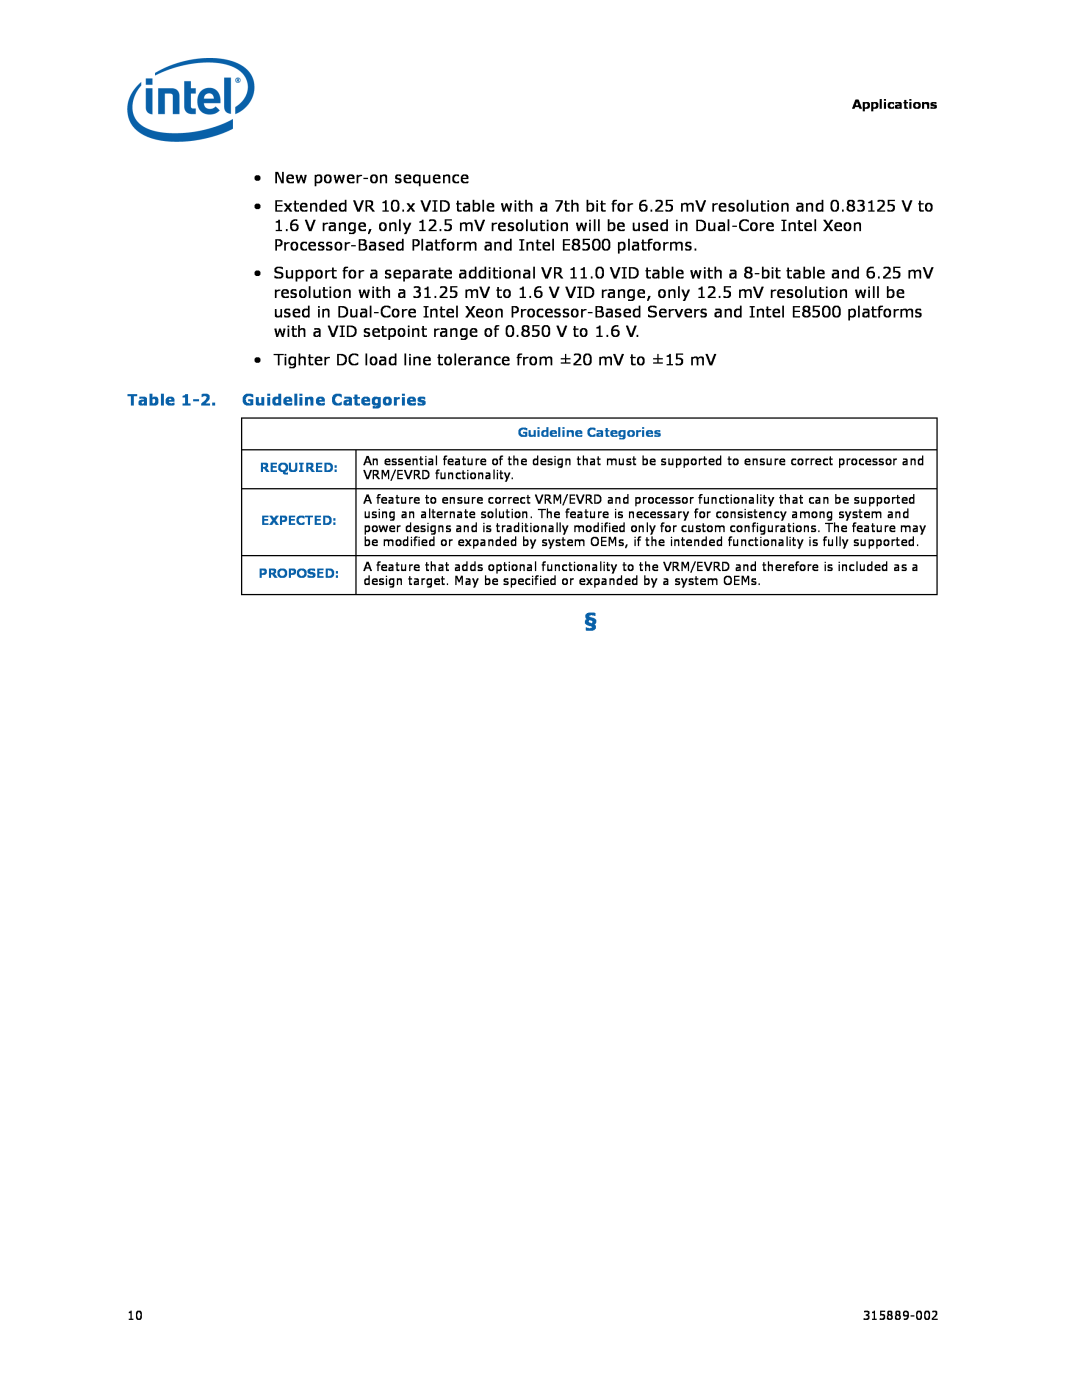 Intel 315889-002 manual 2.Guideline Categories 